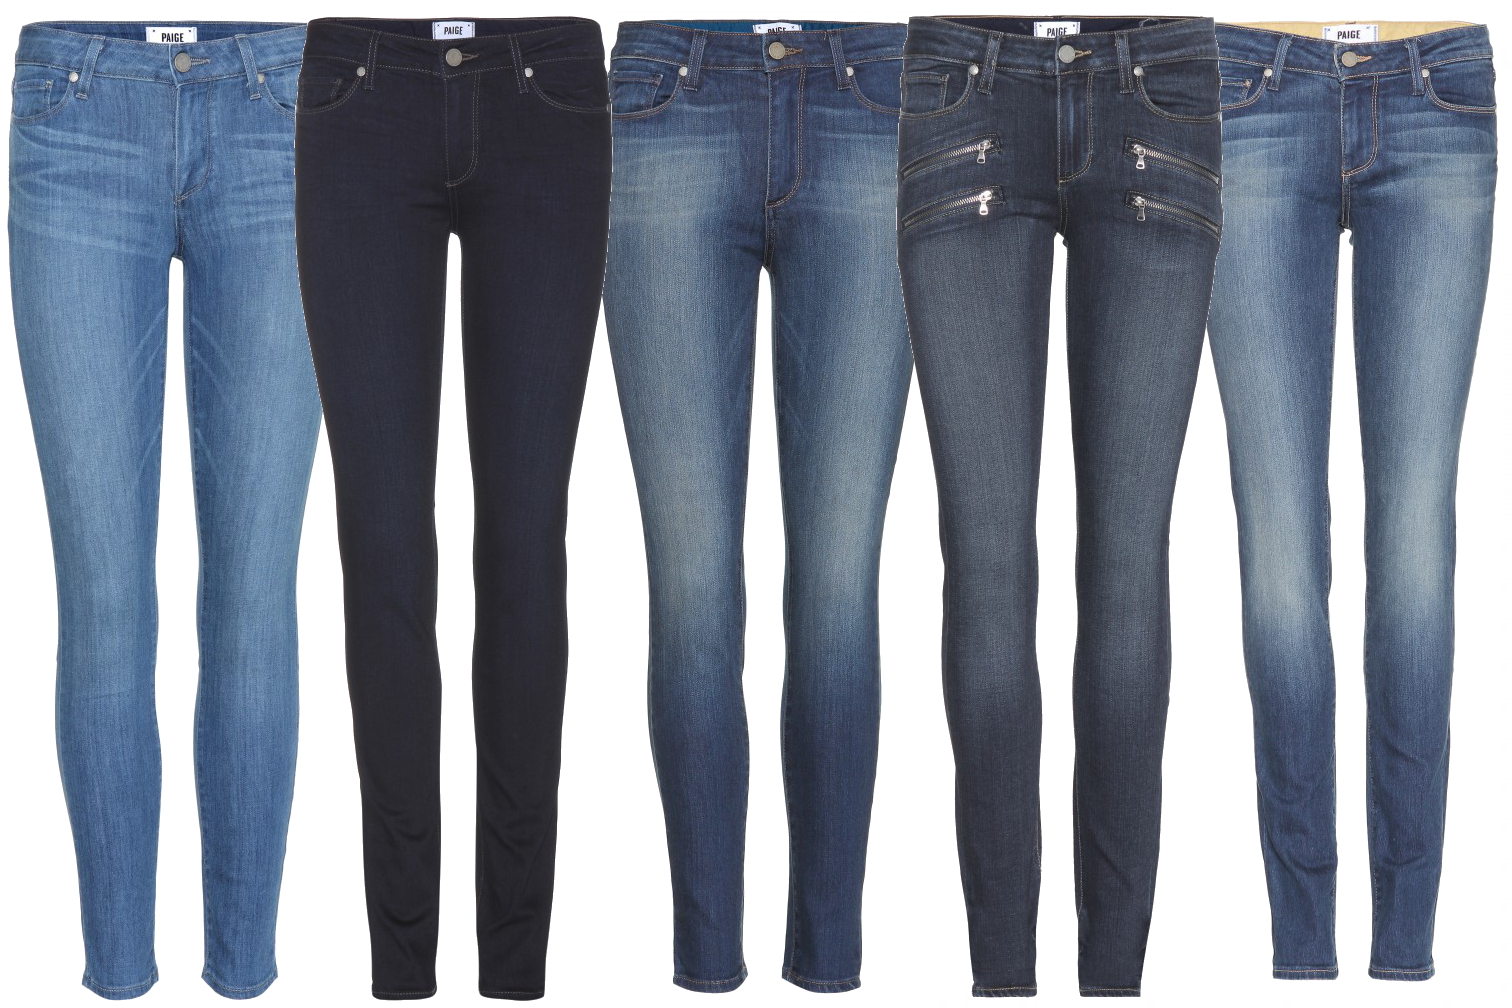 BYCHILL Paige Denim Skinny Jeans